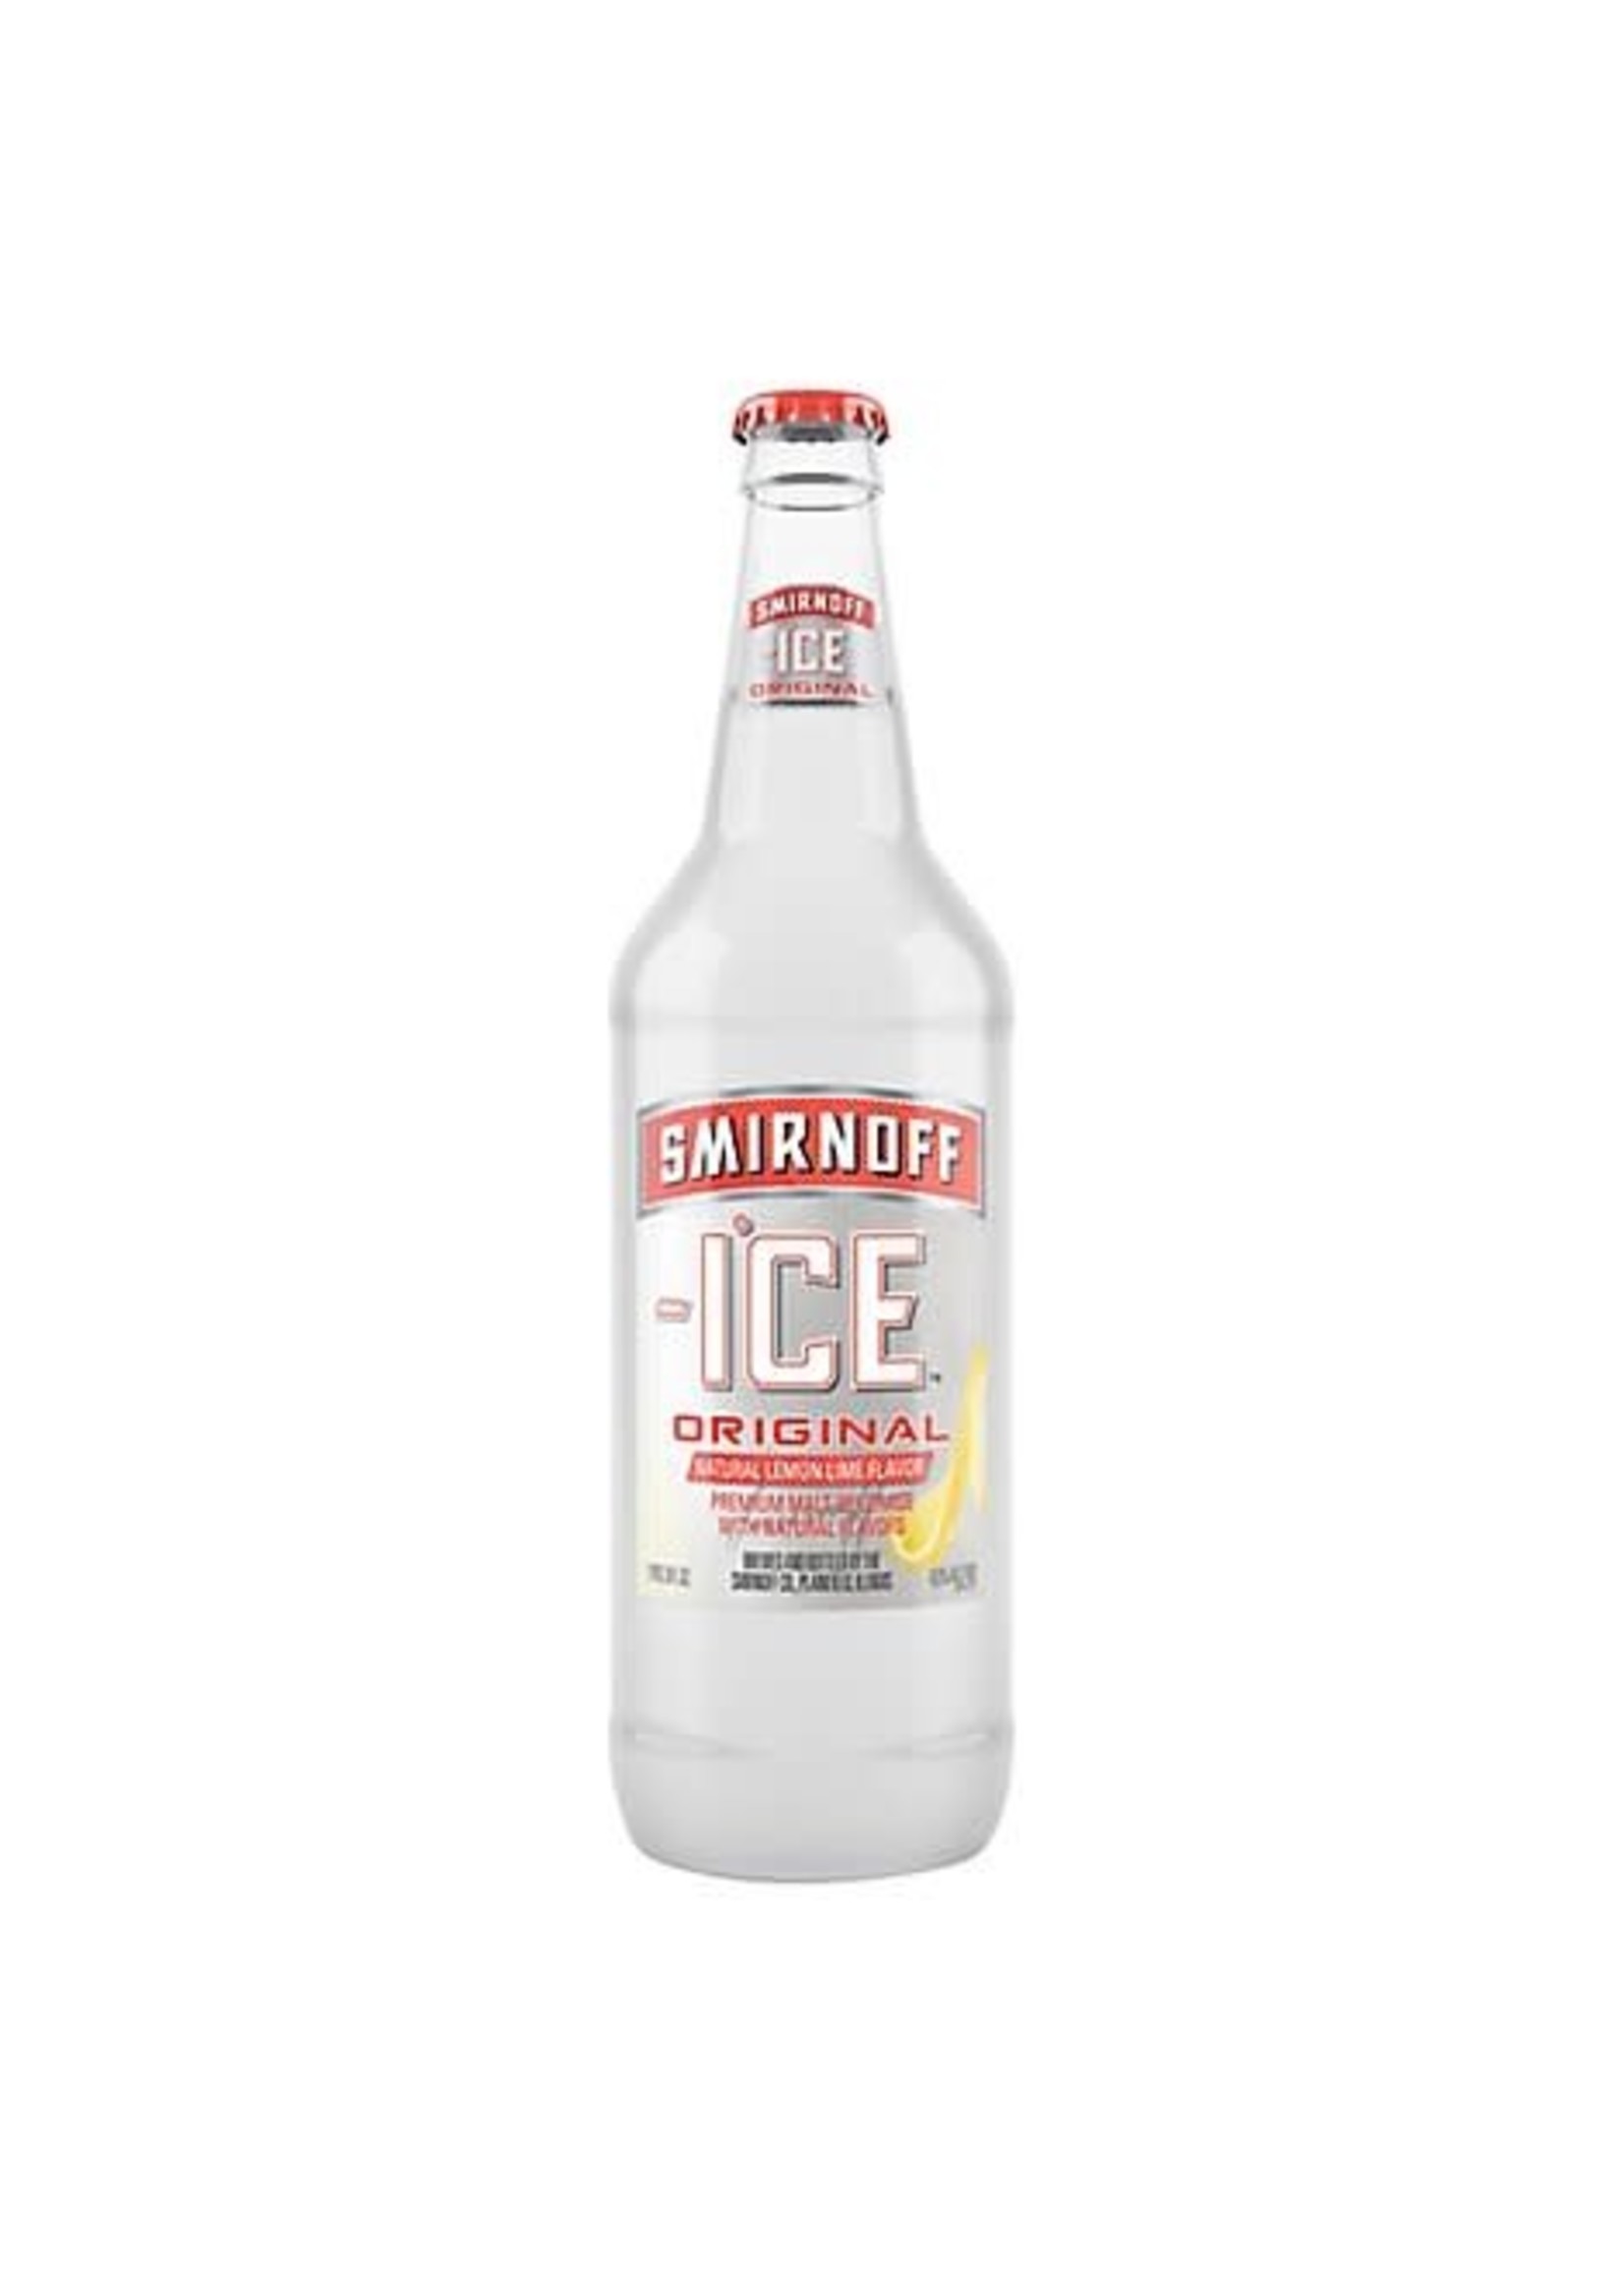 Smirnoff Ice Original 4.5% ABV Single Bottle 24oz